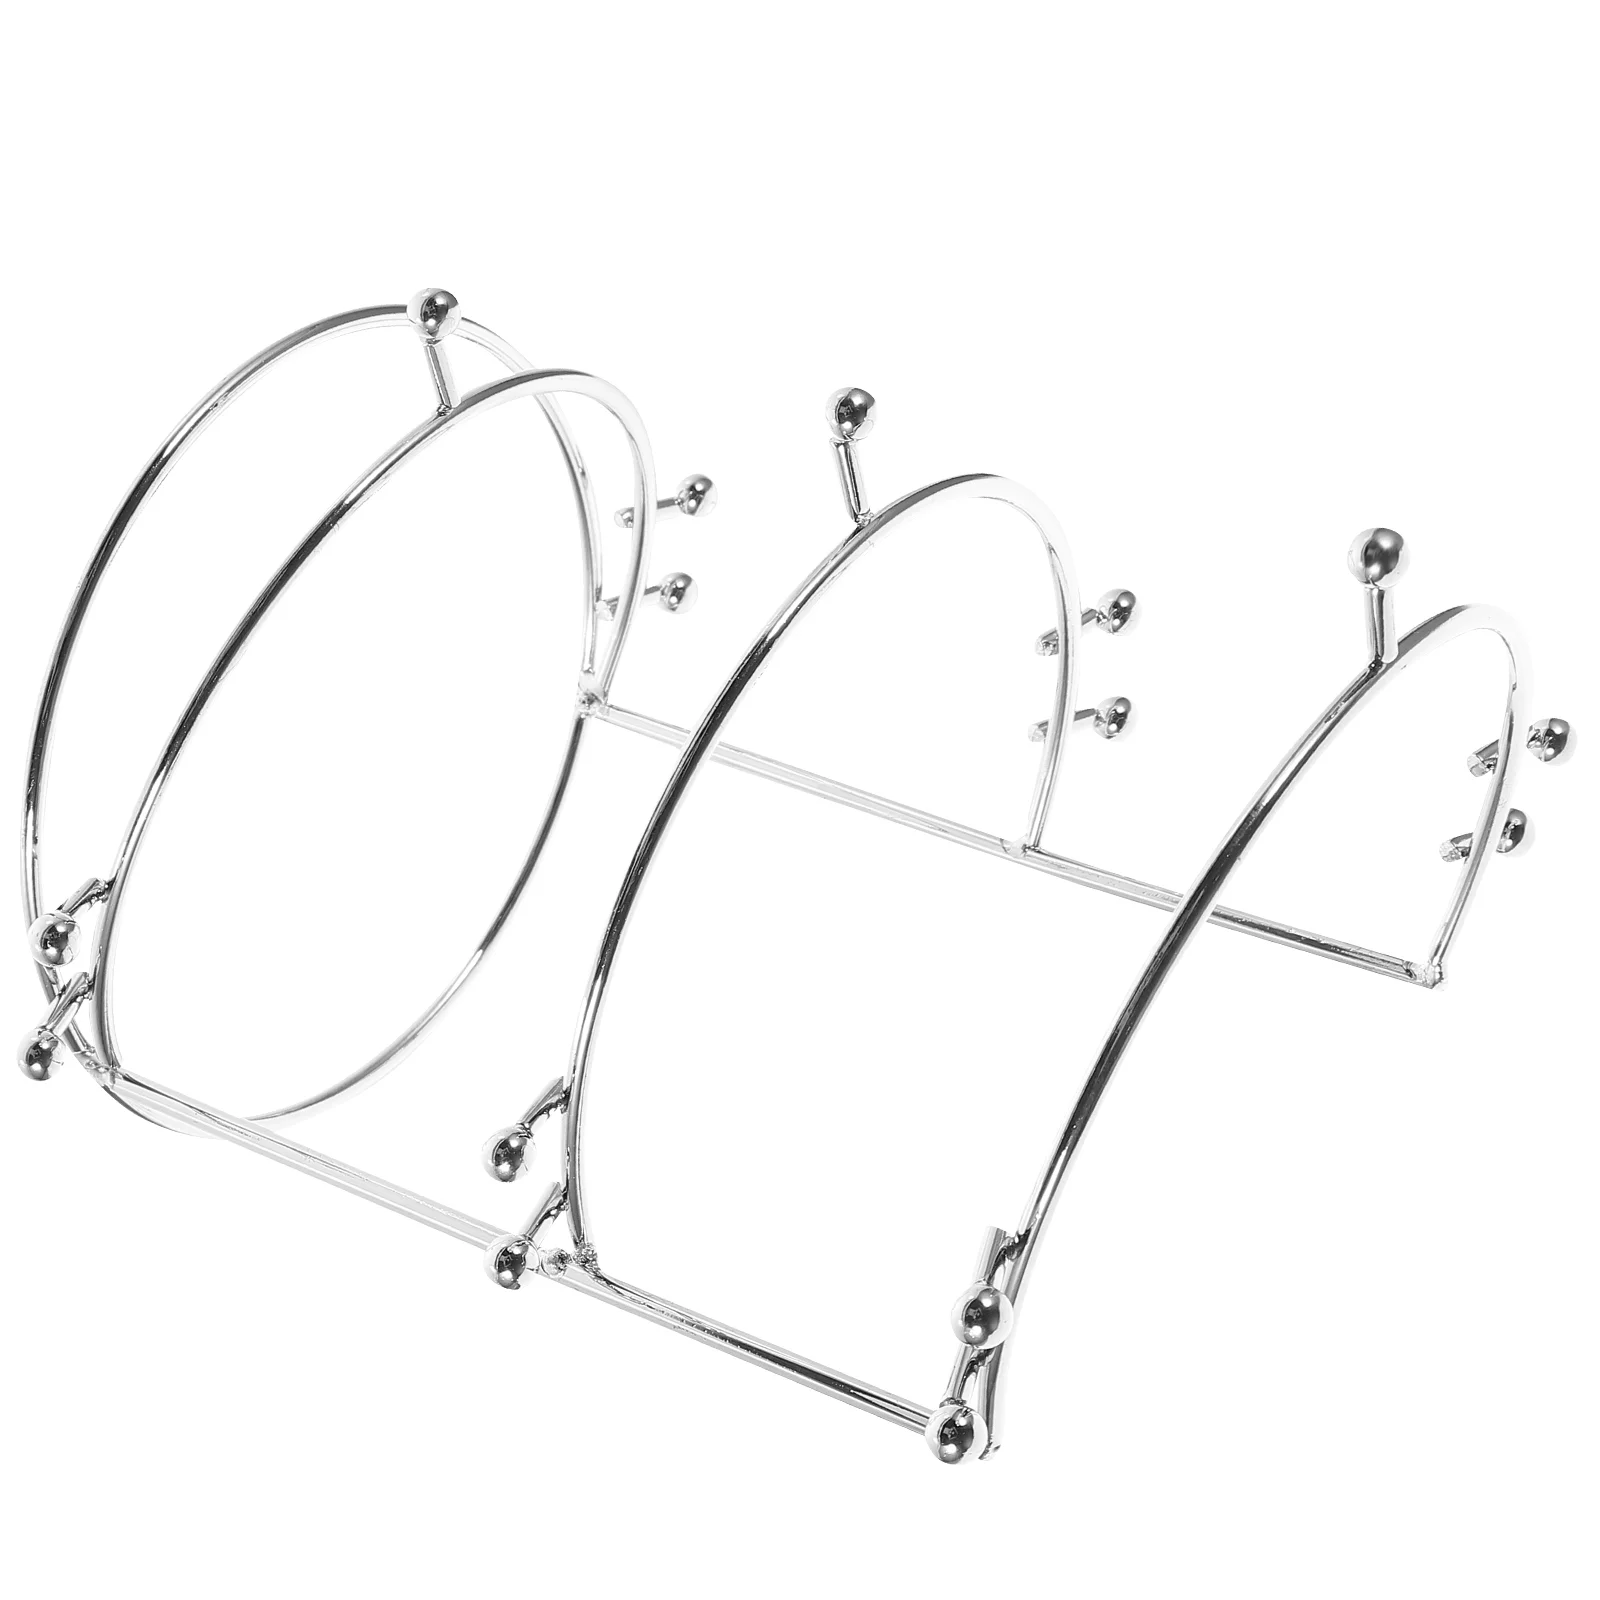 

Tiara Crown Display Stand Three-Tier Rack Jewelry Holder Headband Hairband Headpiece Organizer Silver